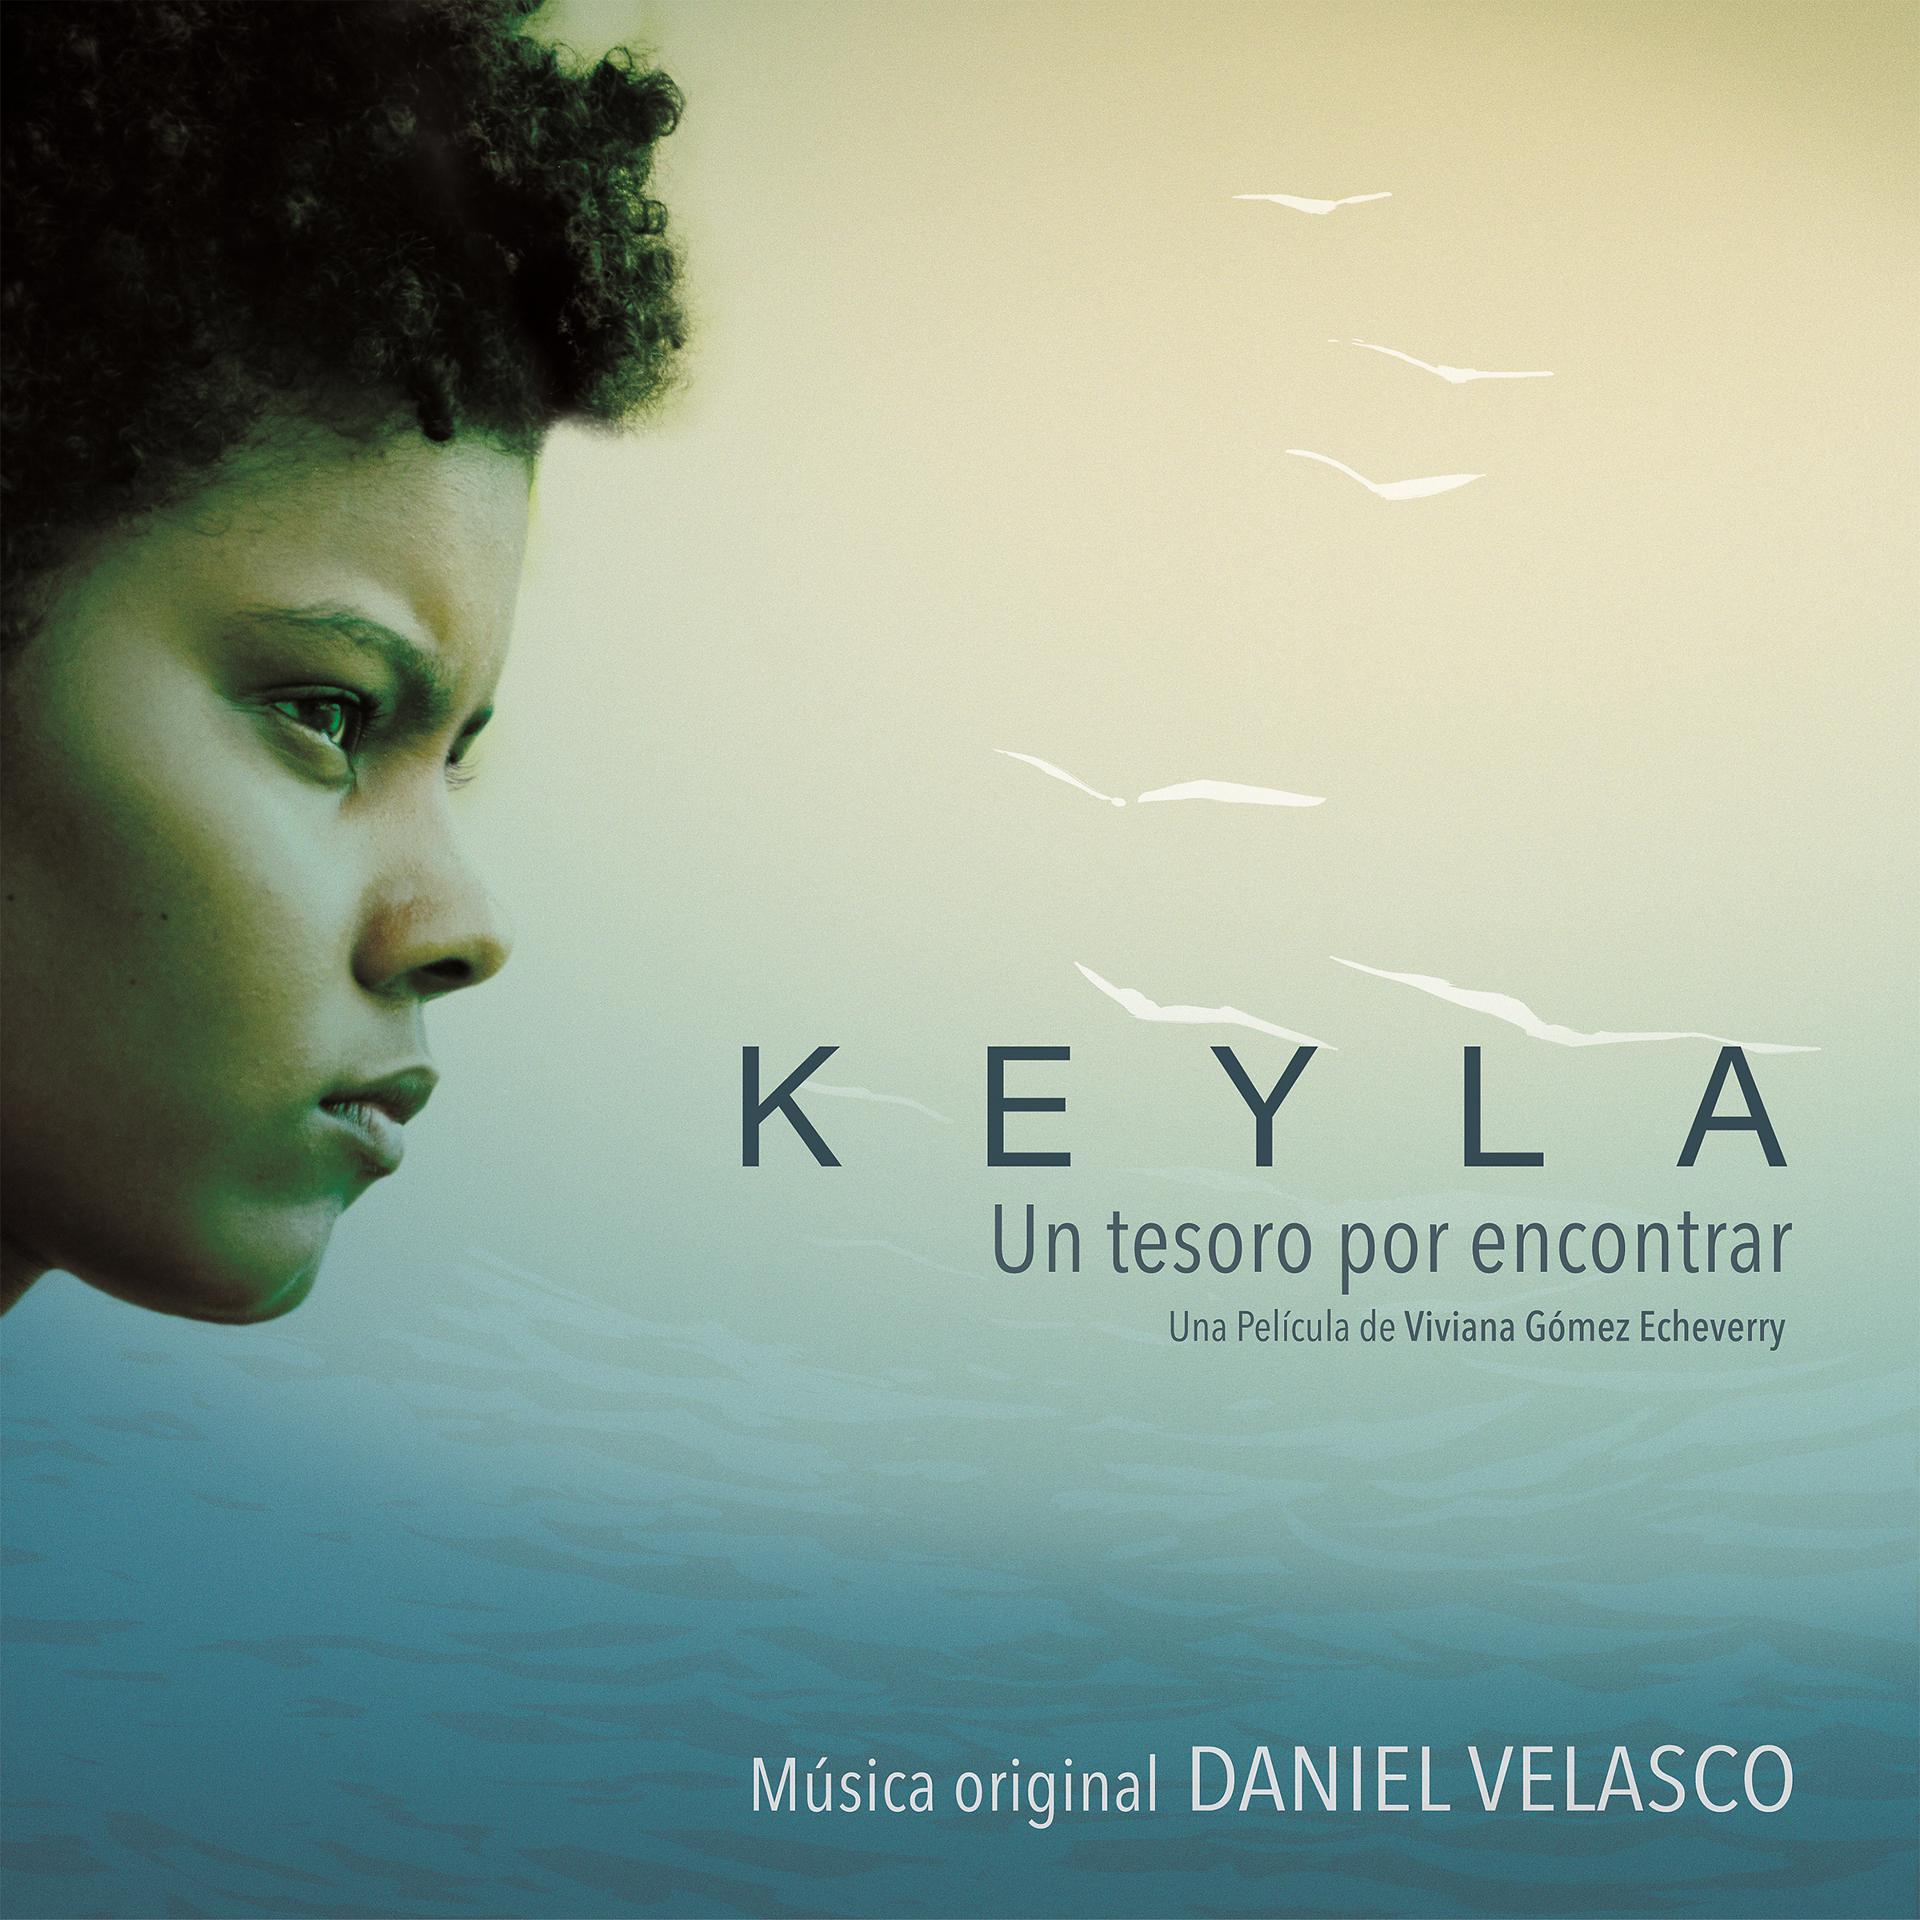 Постер к треку Daniel Velasco - Sueño I